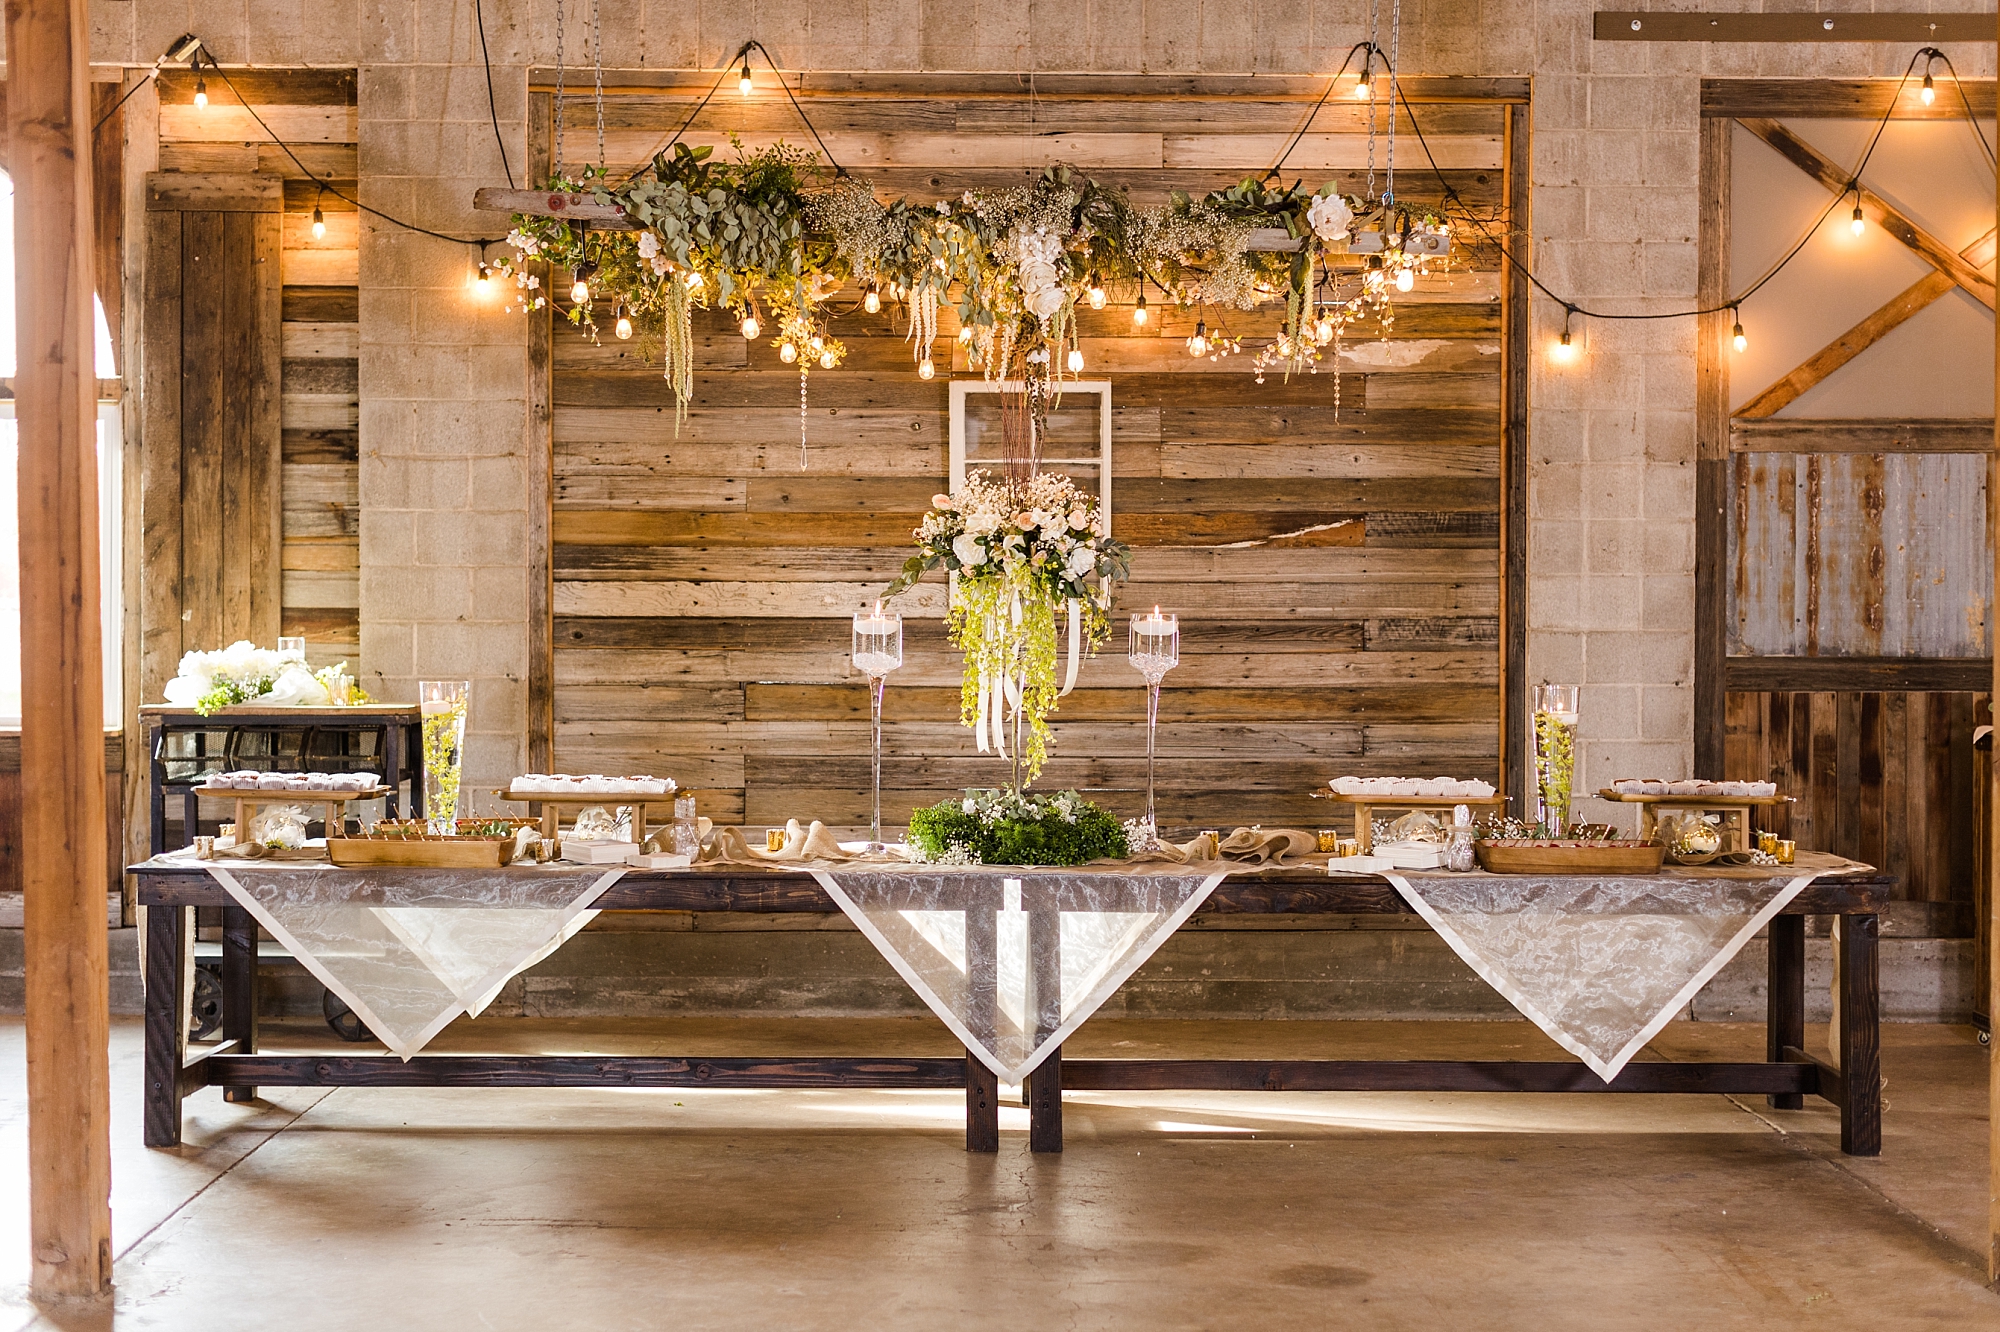 How to decorate an elegant rustic barn wedding